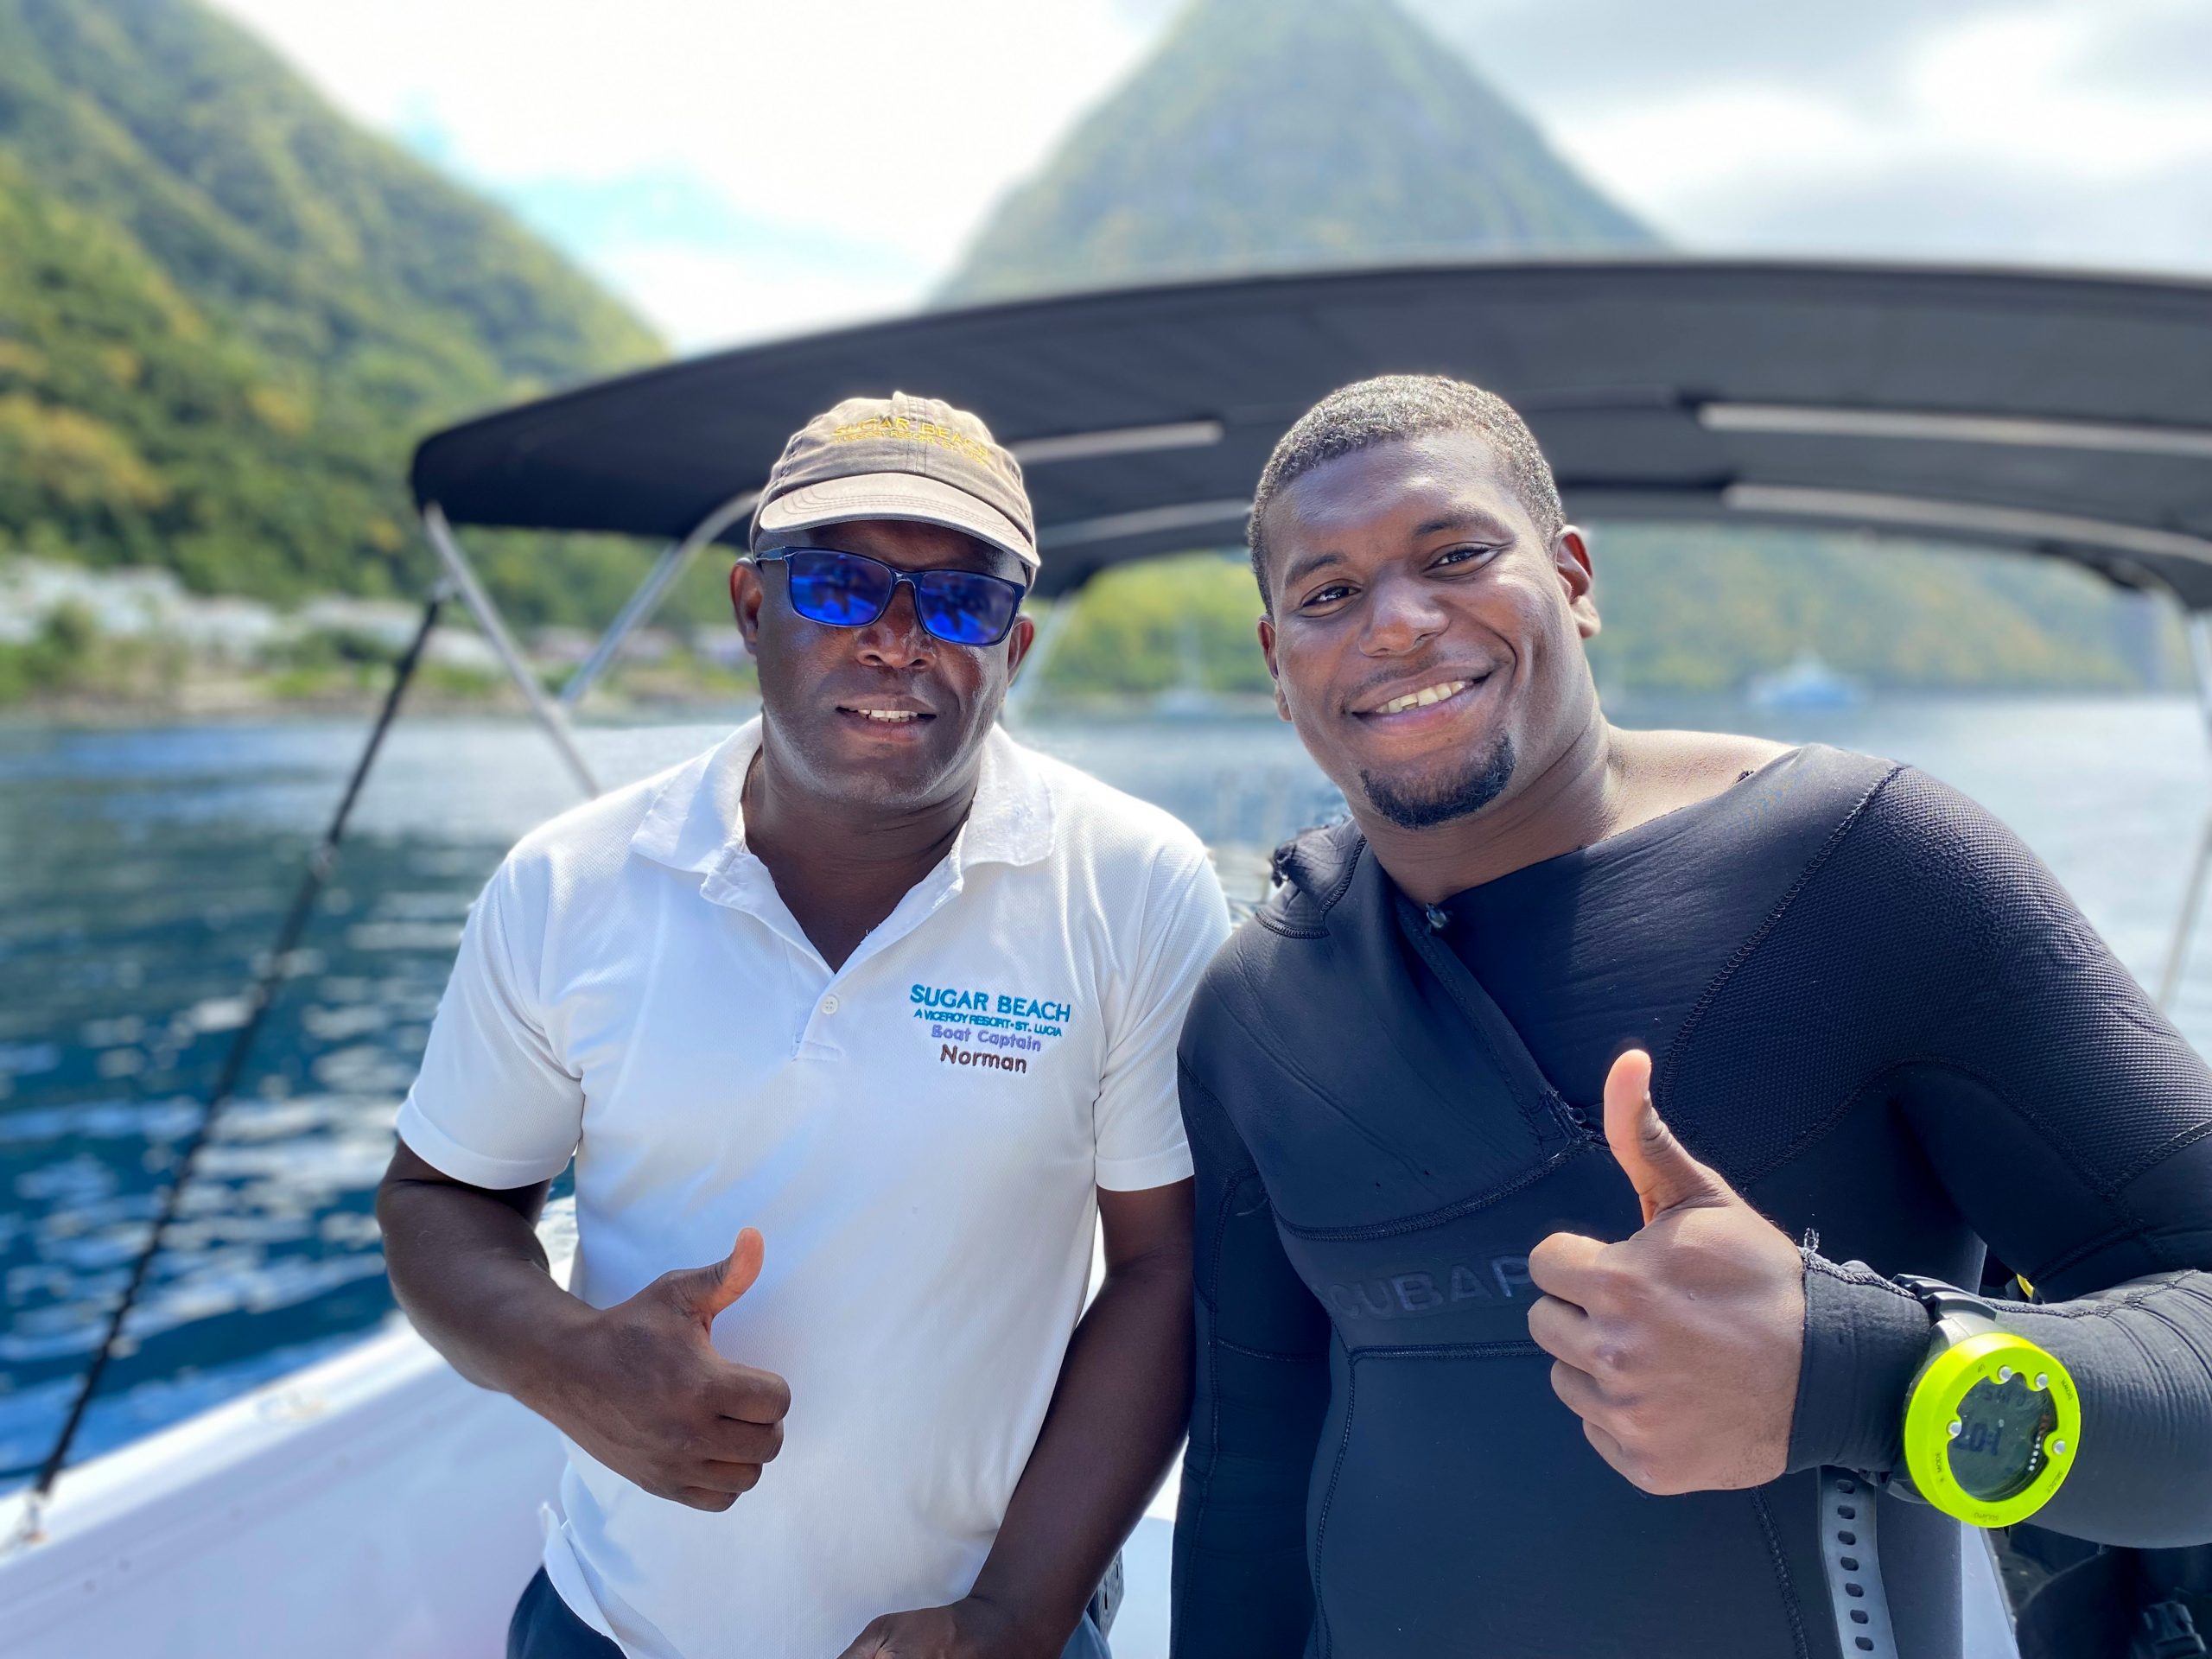 Boat Captain Norman and Divemaster Rick run an excellent scuba diving program. Elijah Jean-Baptiste is the wonderful manager.